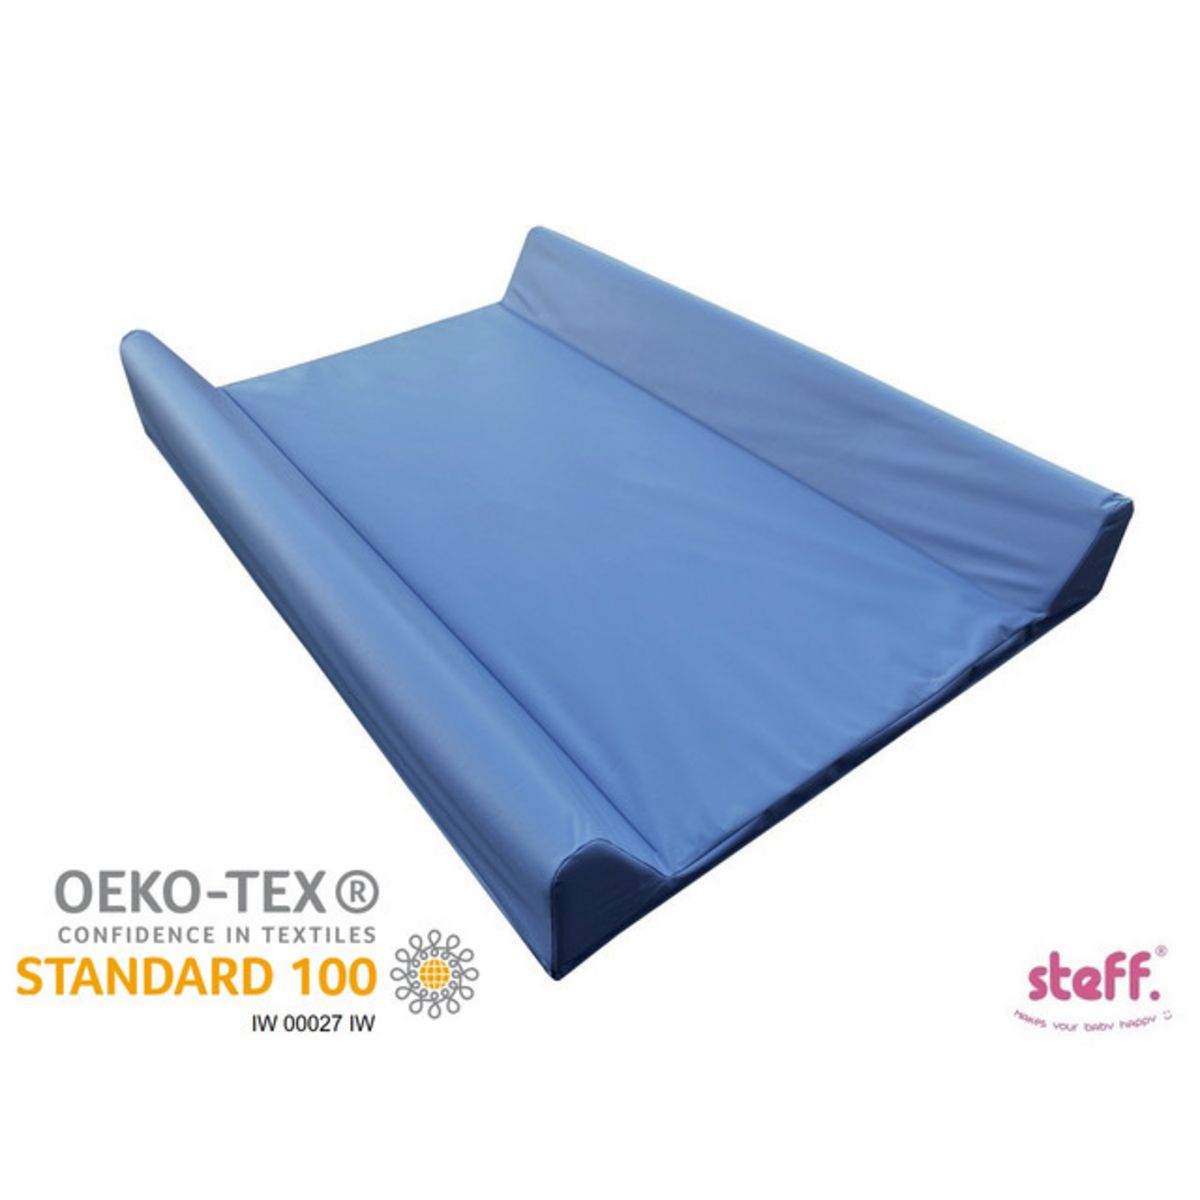  Steff - Matelas à langer avec rebords - 70x50 cm - Bleu indigo - Label de qualité OEKO-TEX standard 100